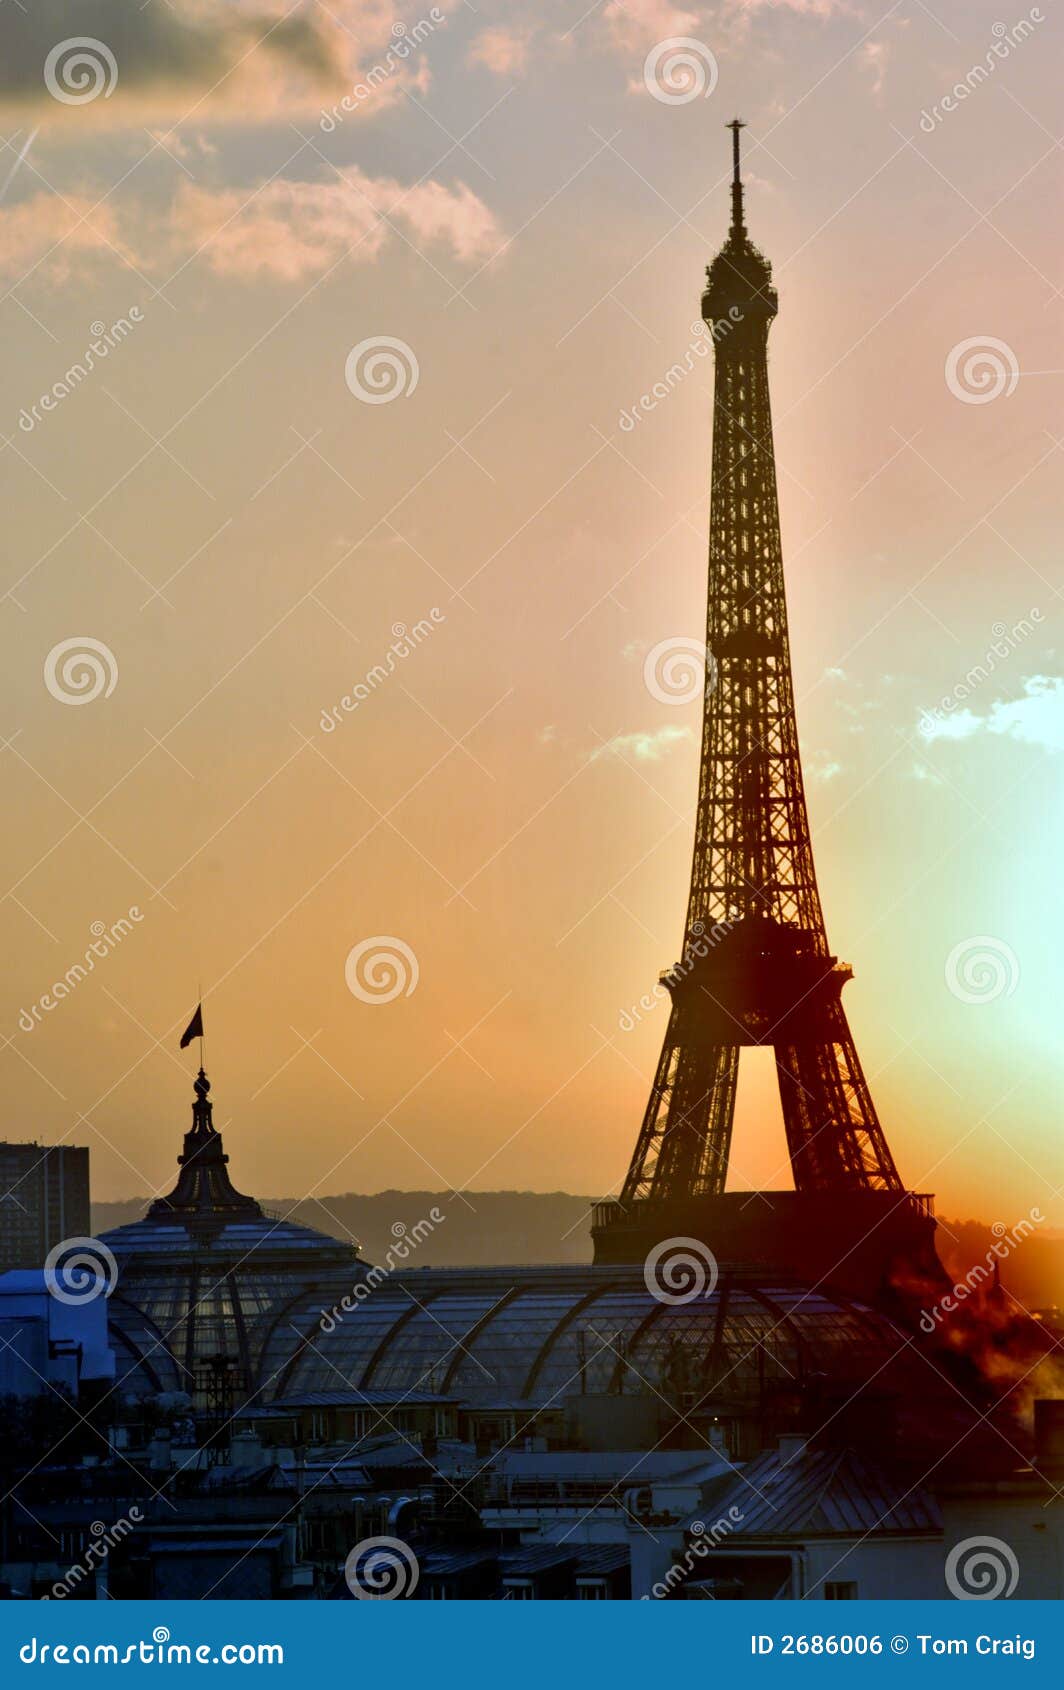 Eiffelturm am Sonnenuntergang. Paris, Frankreich, Ansicht des Eiffelturms am Sonnenuntergang.